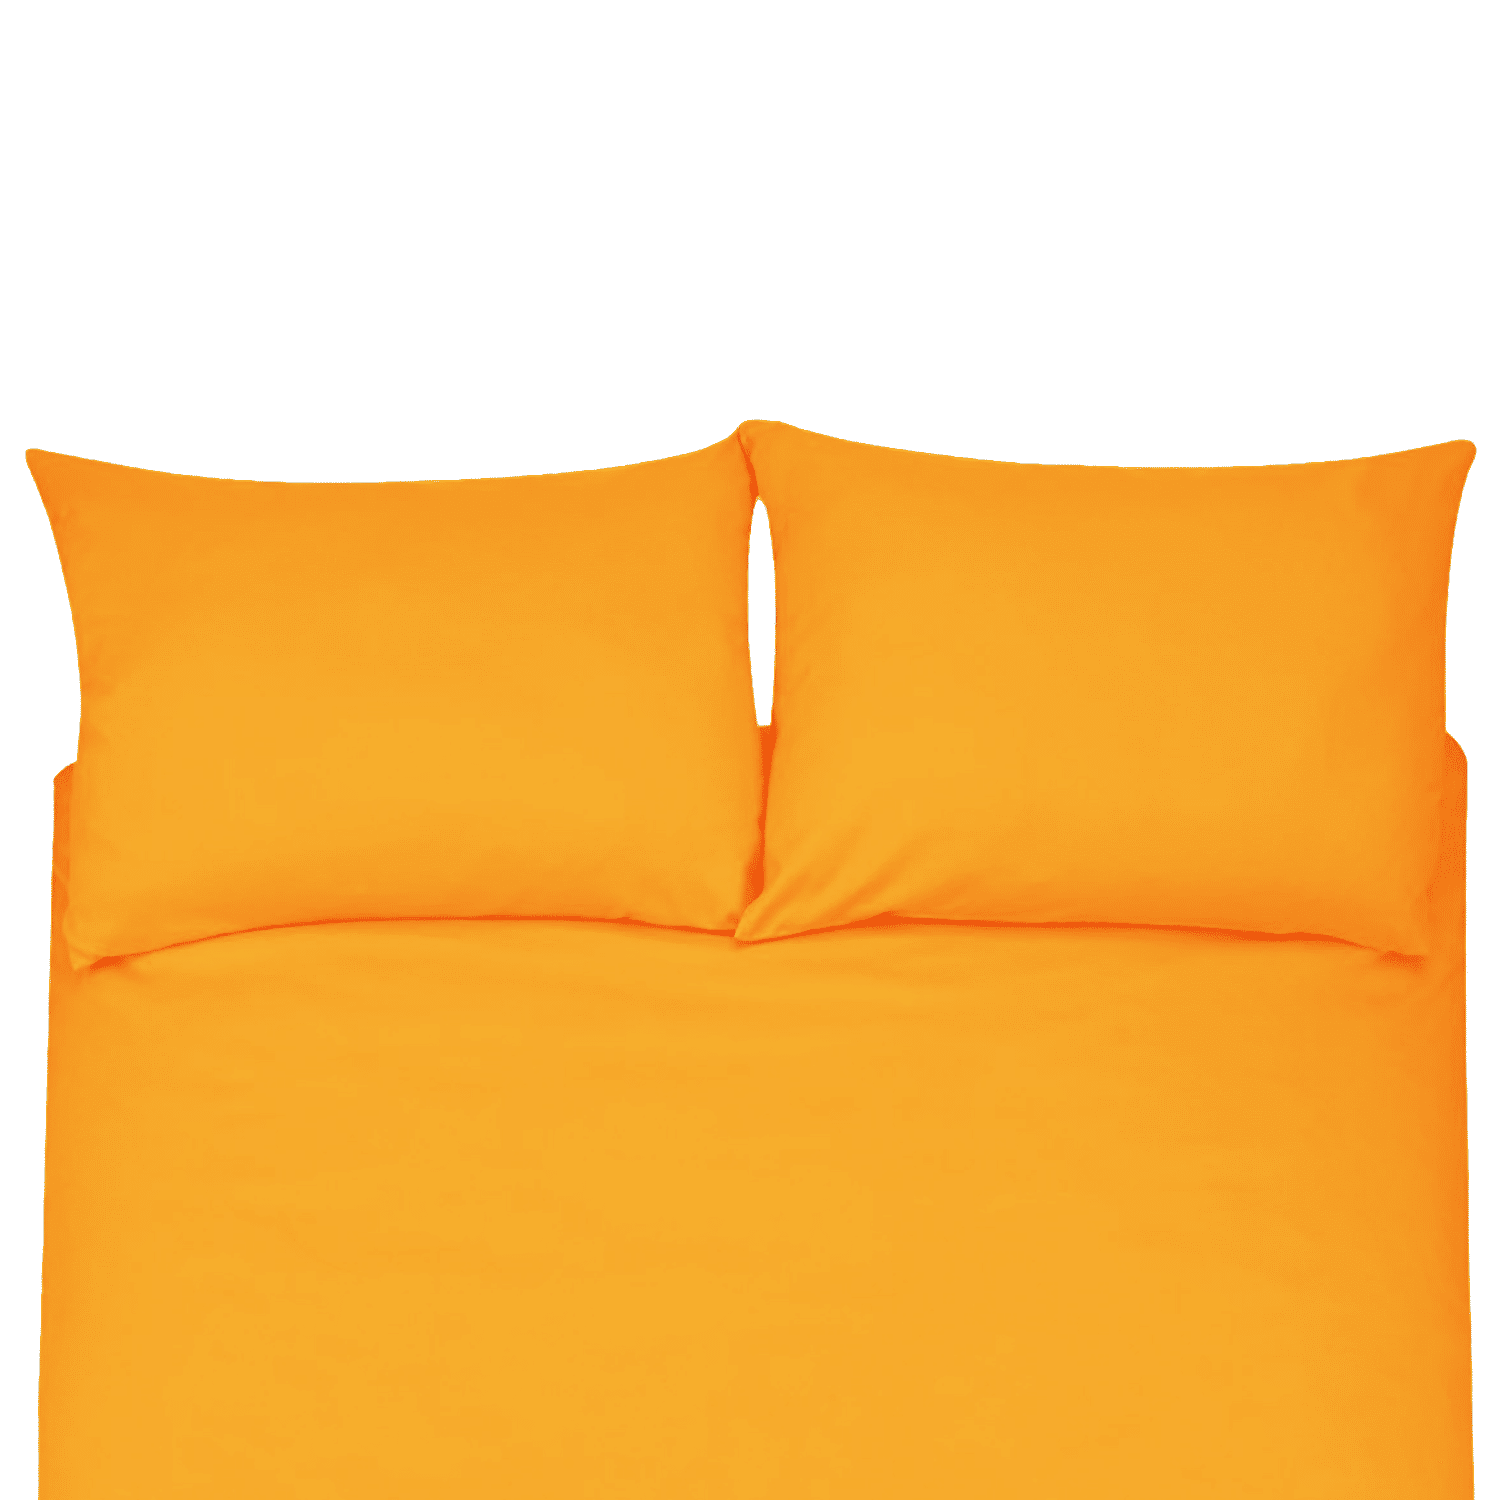 Completo-lenzuola-arancio-colors-100-fibra-naturale-cotone-120-gr-tinta-unita-1-piazza-½-francese-2-piazze-oekotex